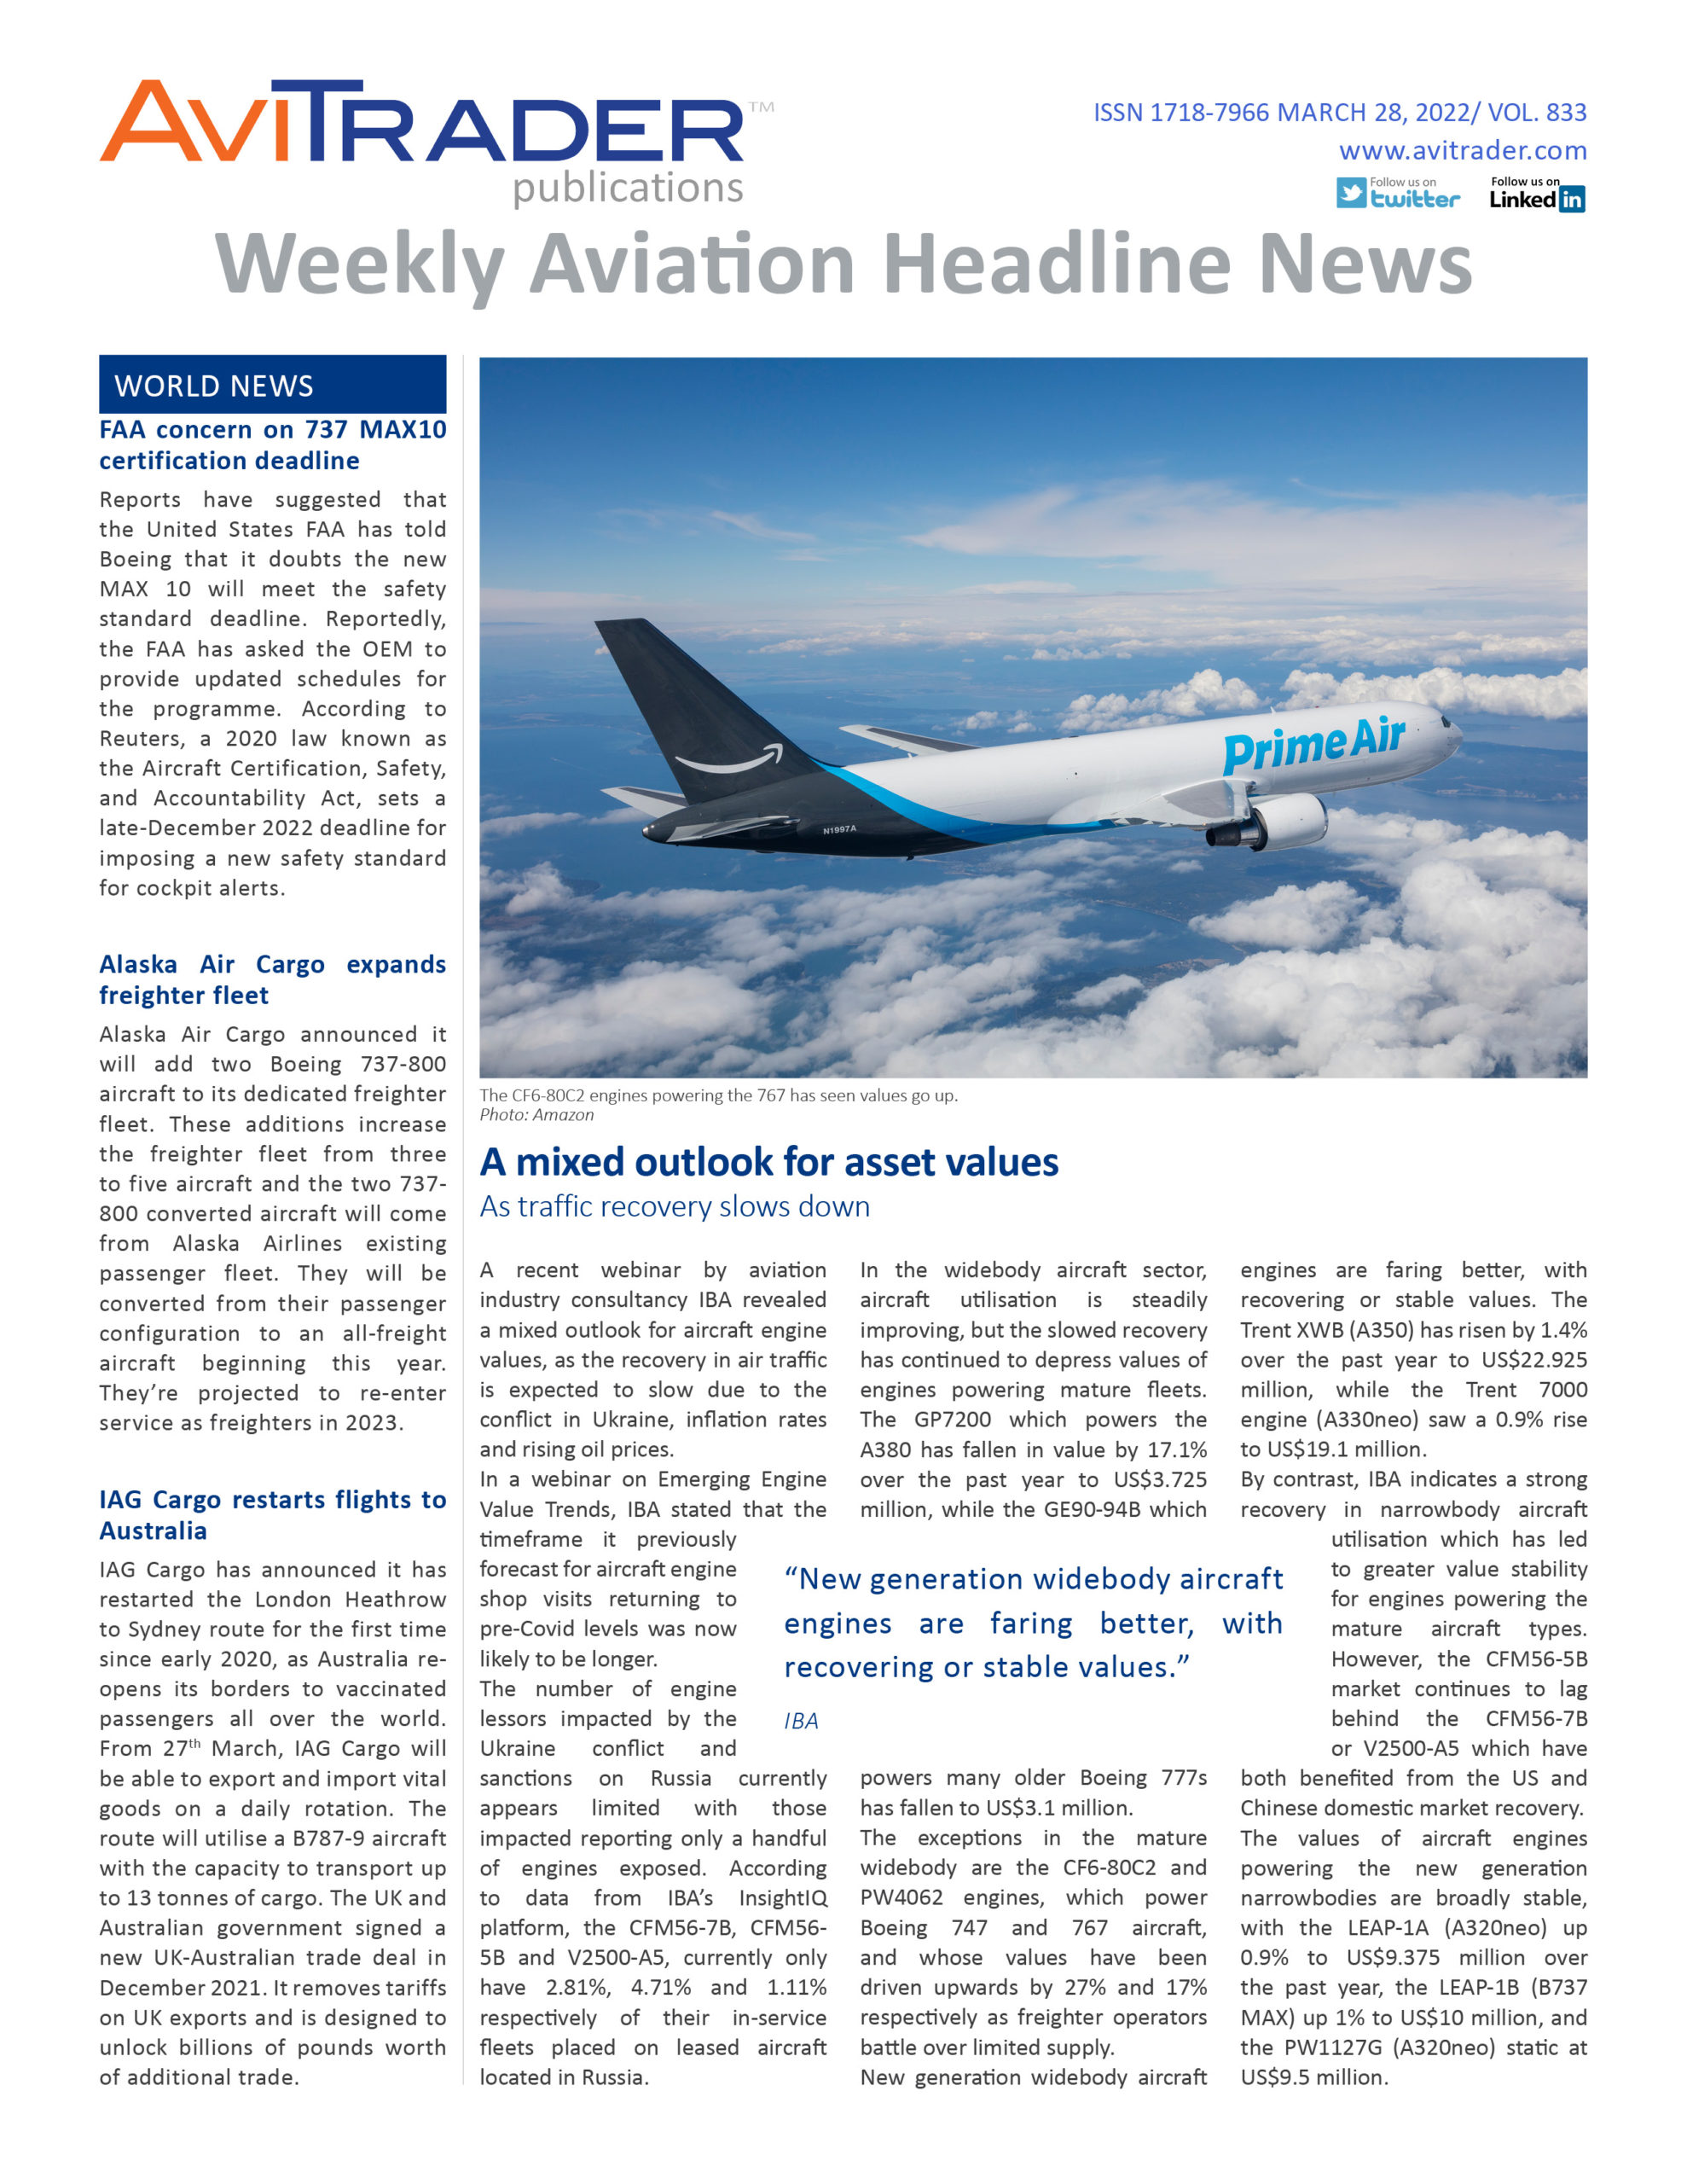 AviTrader_Weekly_Headline_News_Cover_2022-03-28